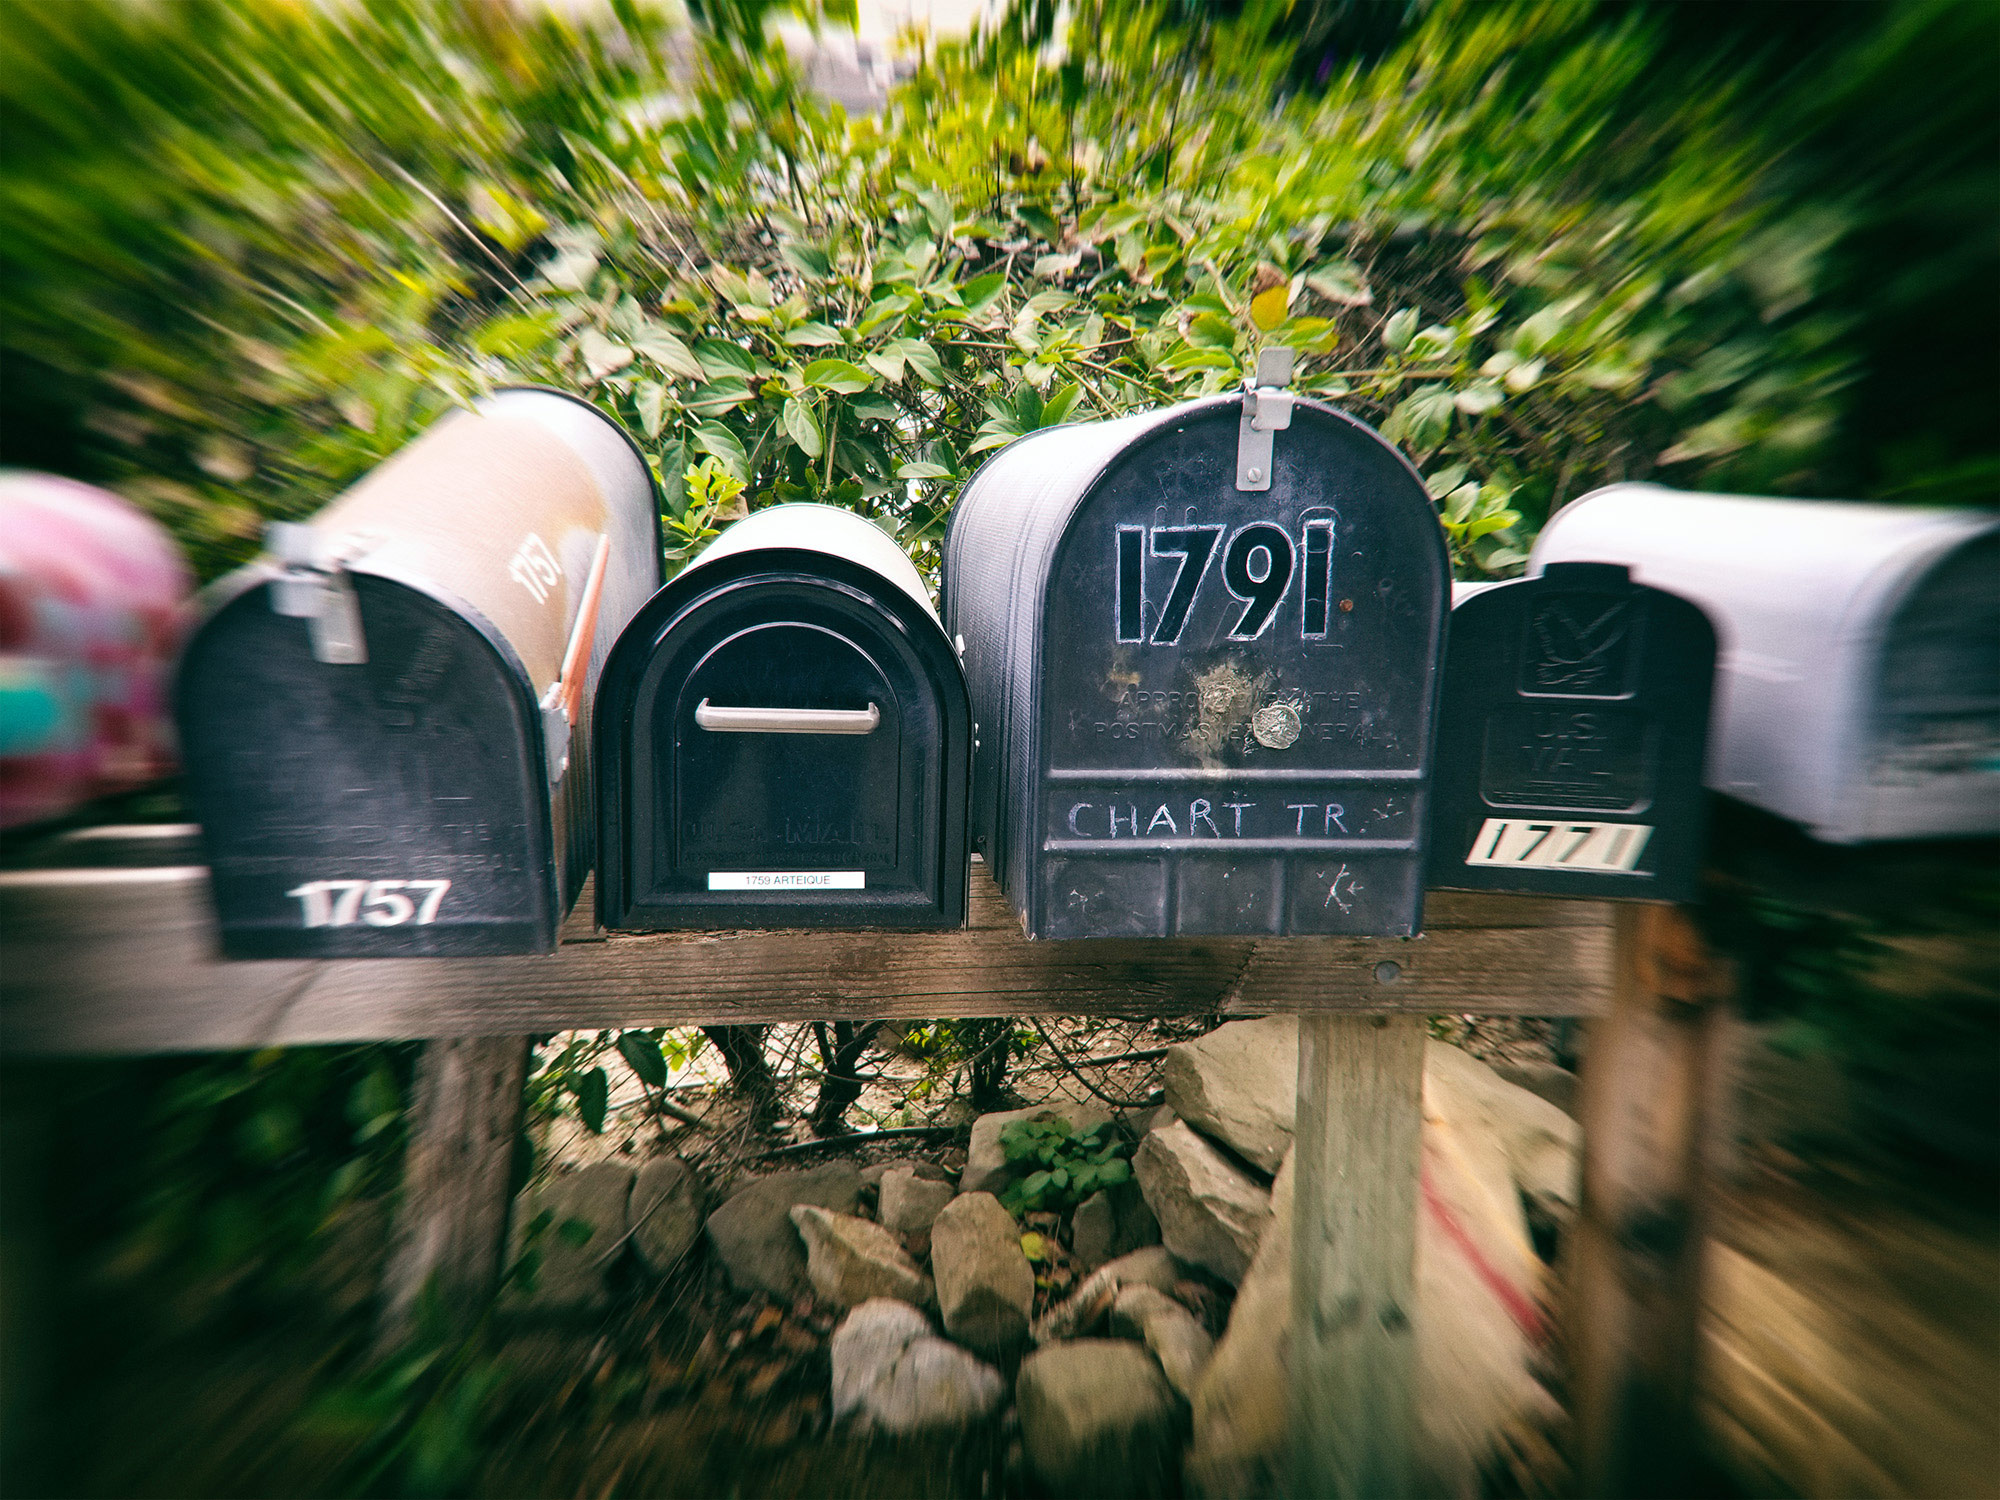  mailboxes ©2018 bret wills